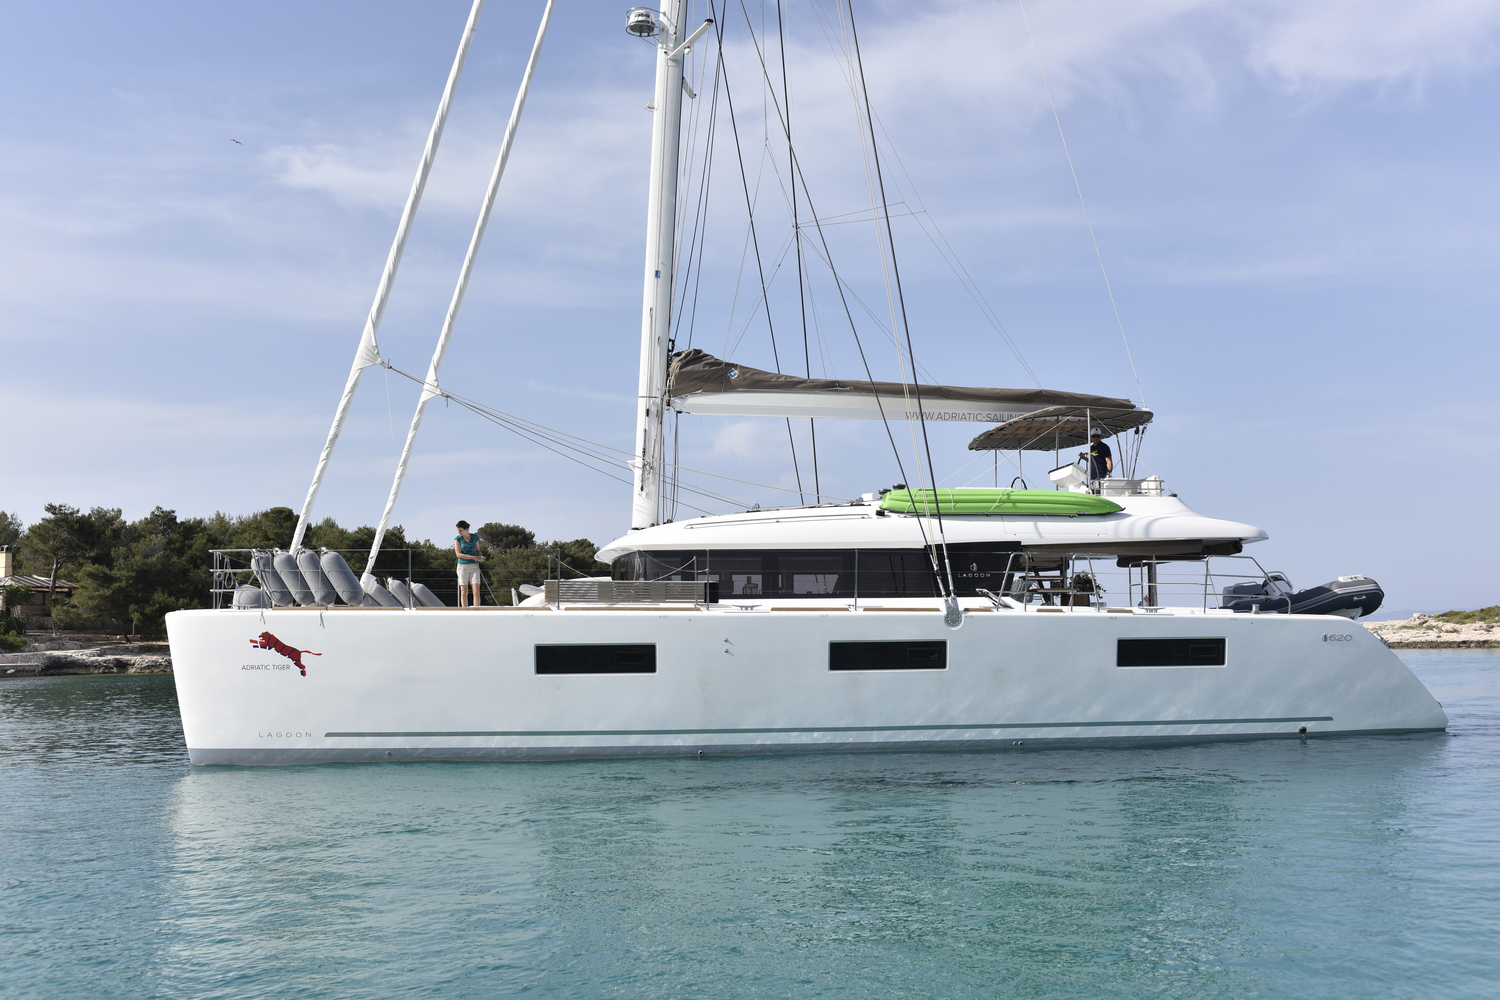 ADRIATIC TIGER Yacht Charter Details, Lagoon 620 CHARTERWORLD Luxury